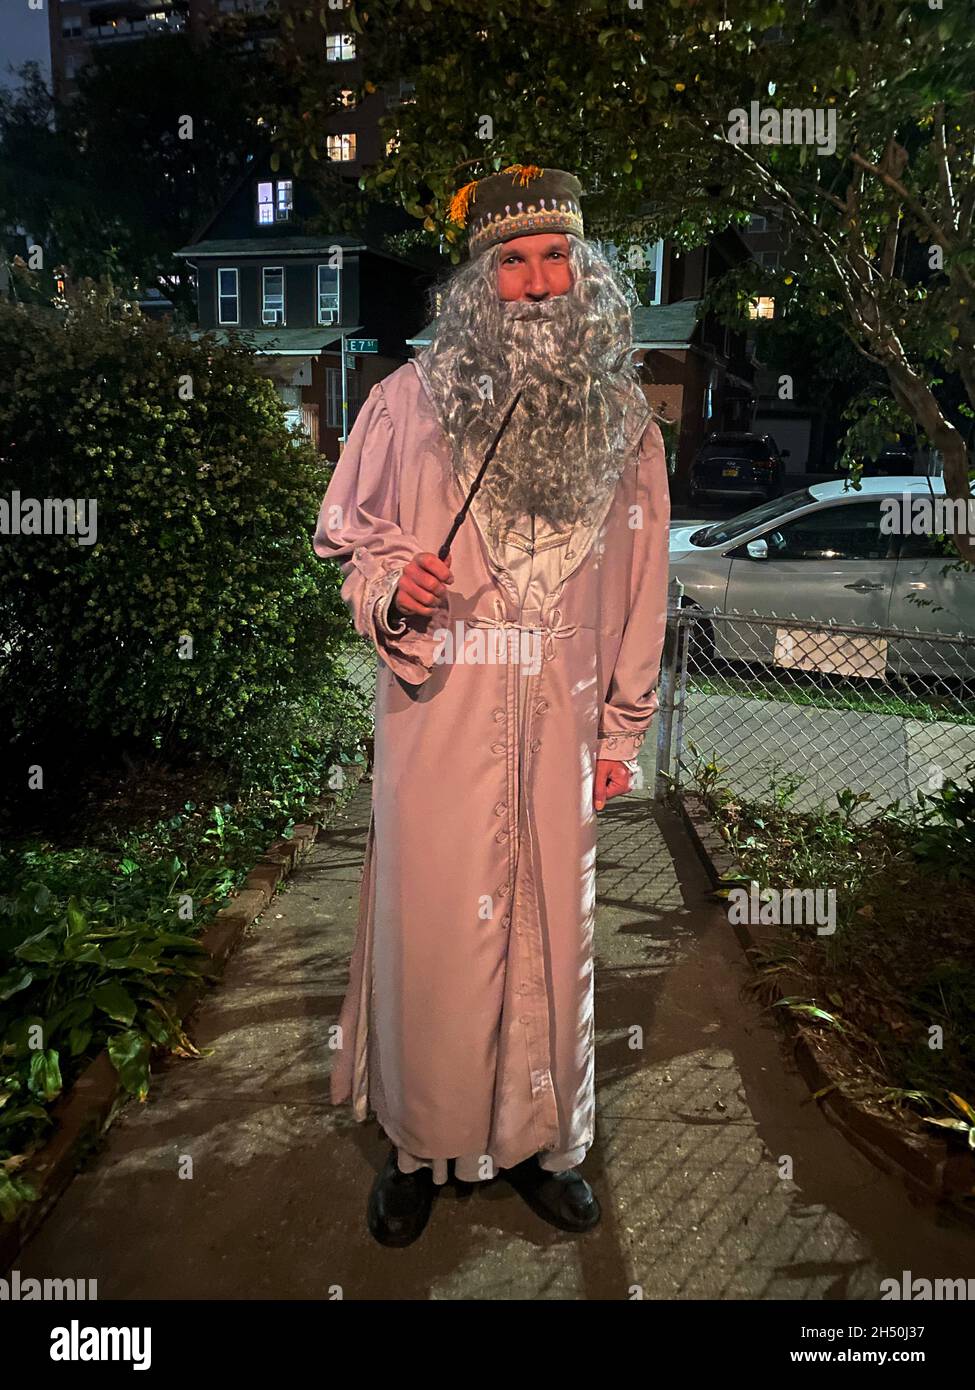 Retrato de un hombre que va a una fiesta de Halloween como el mago Dumbledore de los libros de Harry Potter. Noche, Brooklyn, NY. Foto de stock